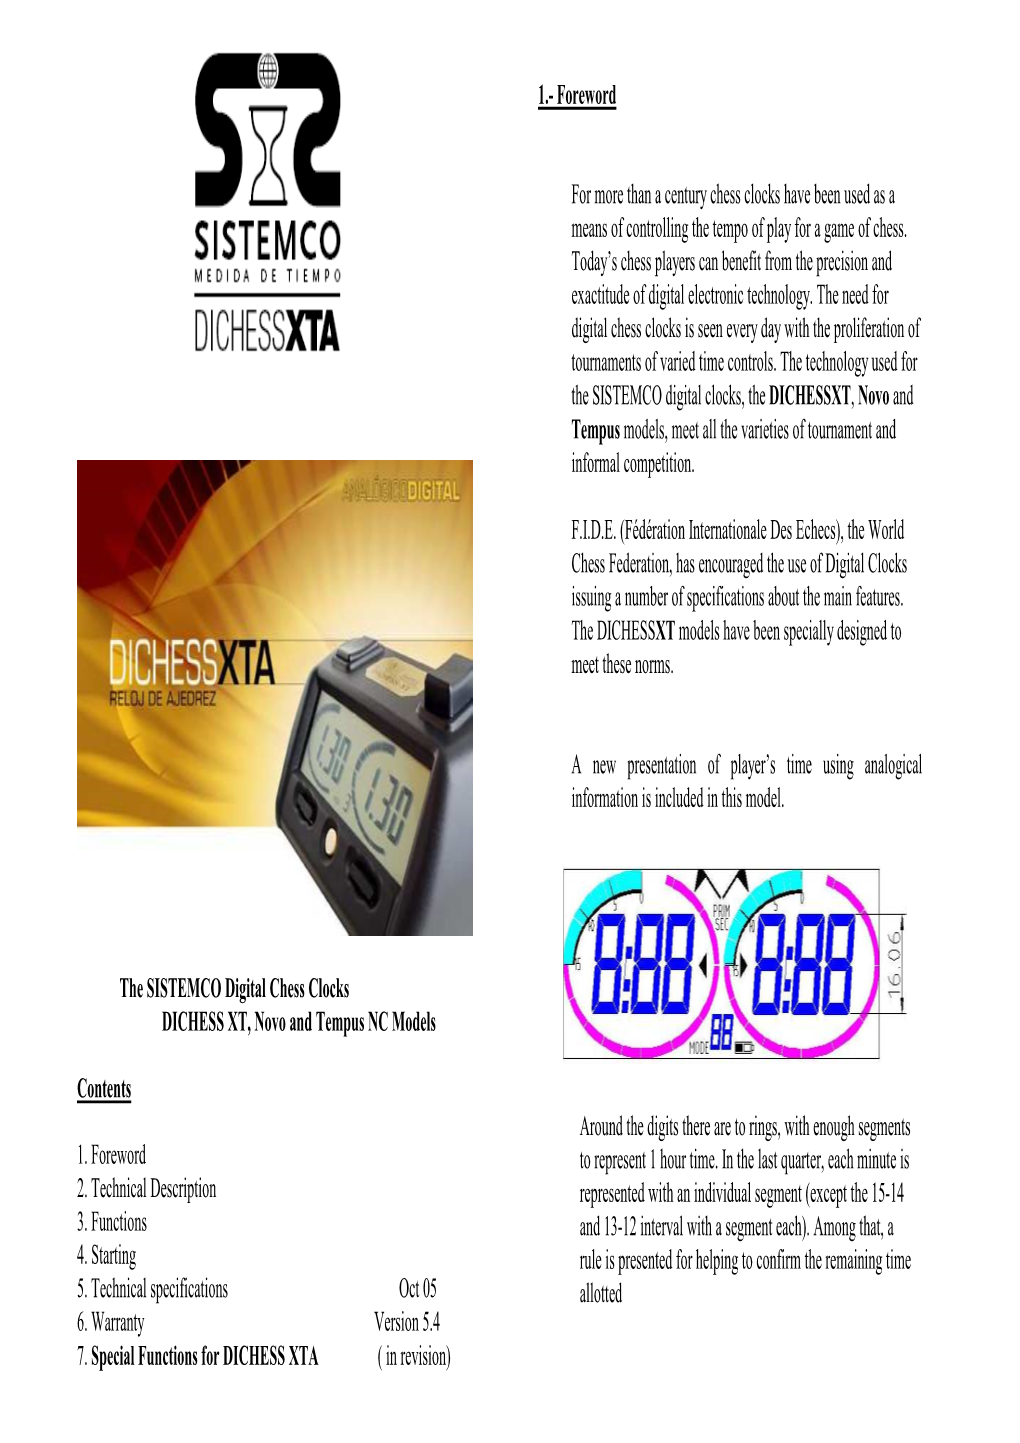 The SISTEMCO Digital Chess Clocks DICHESS XT, Novo and Tempus NC Models